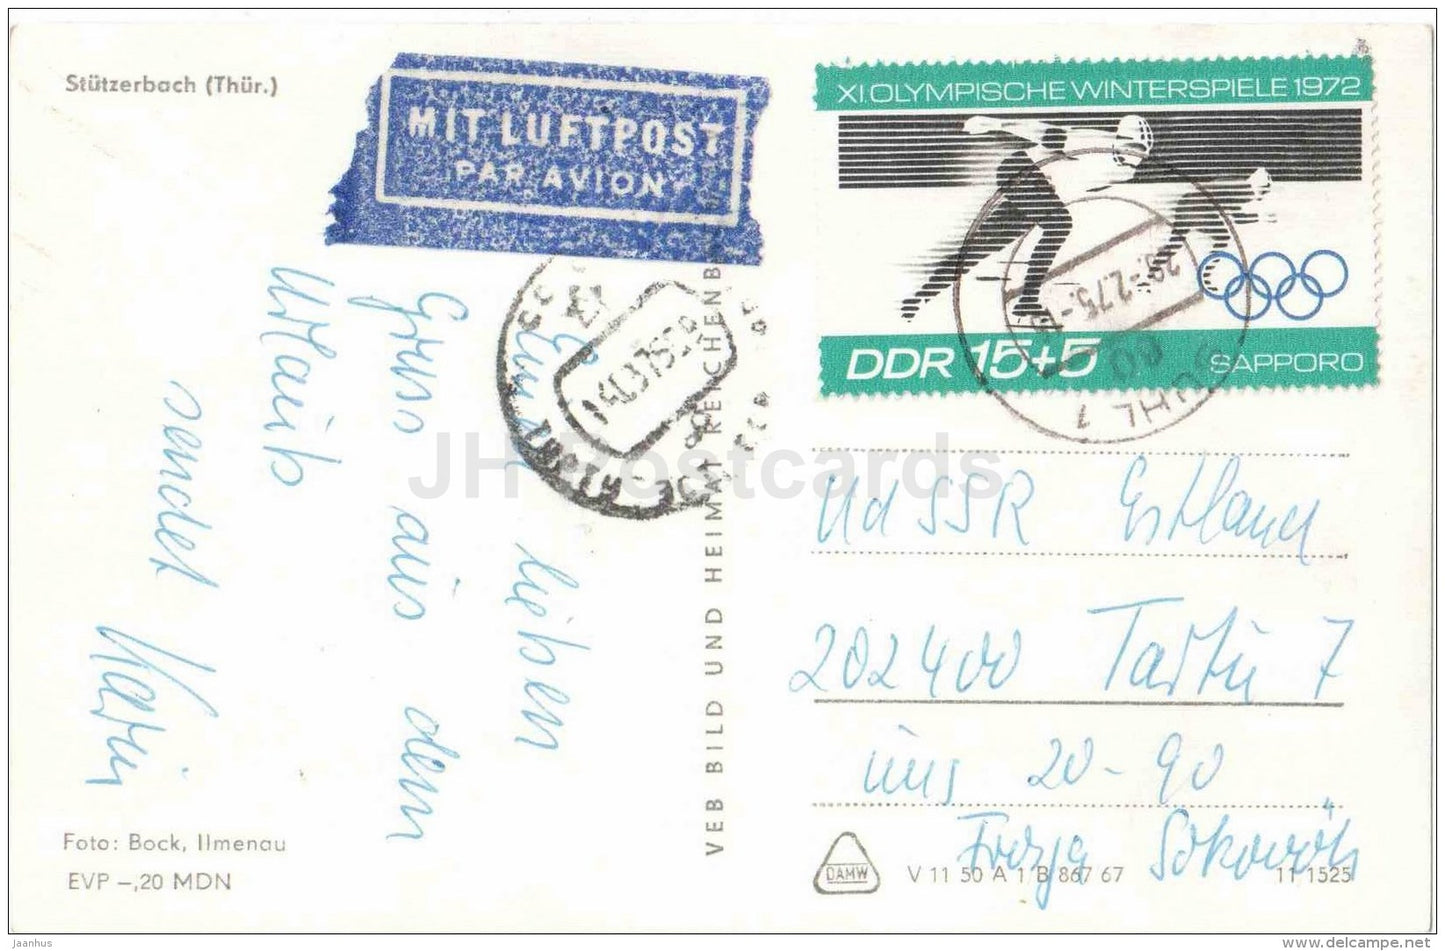 Stützerbach - view - Germany - sent from Germany to Estonia USSR Tallinn 1975 - JH Postcards